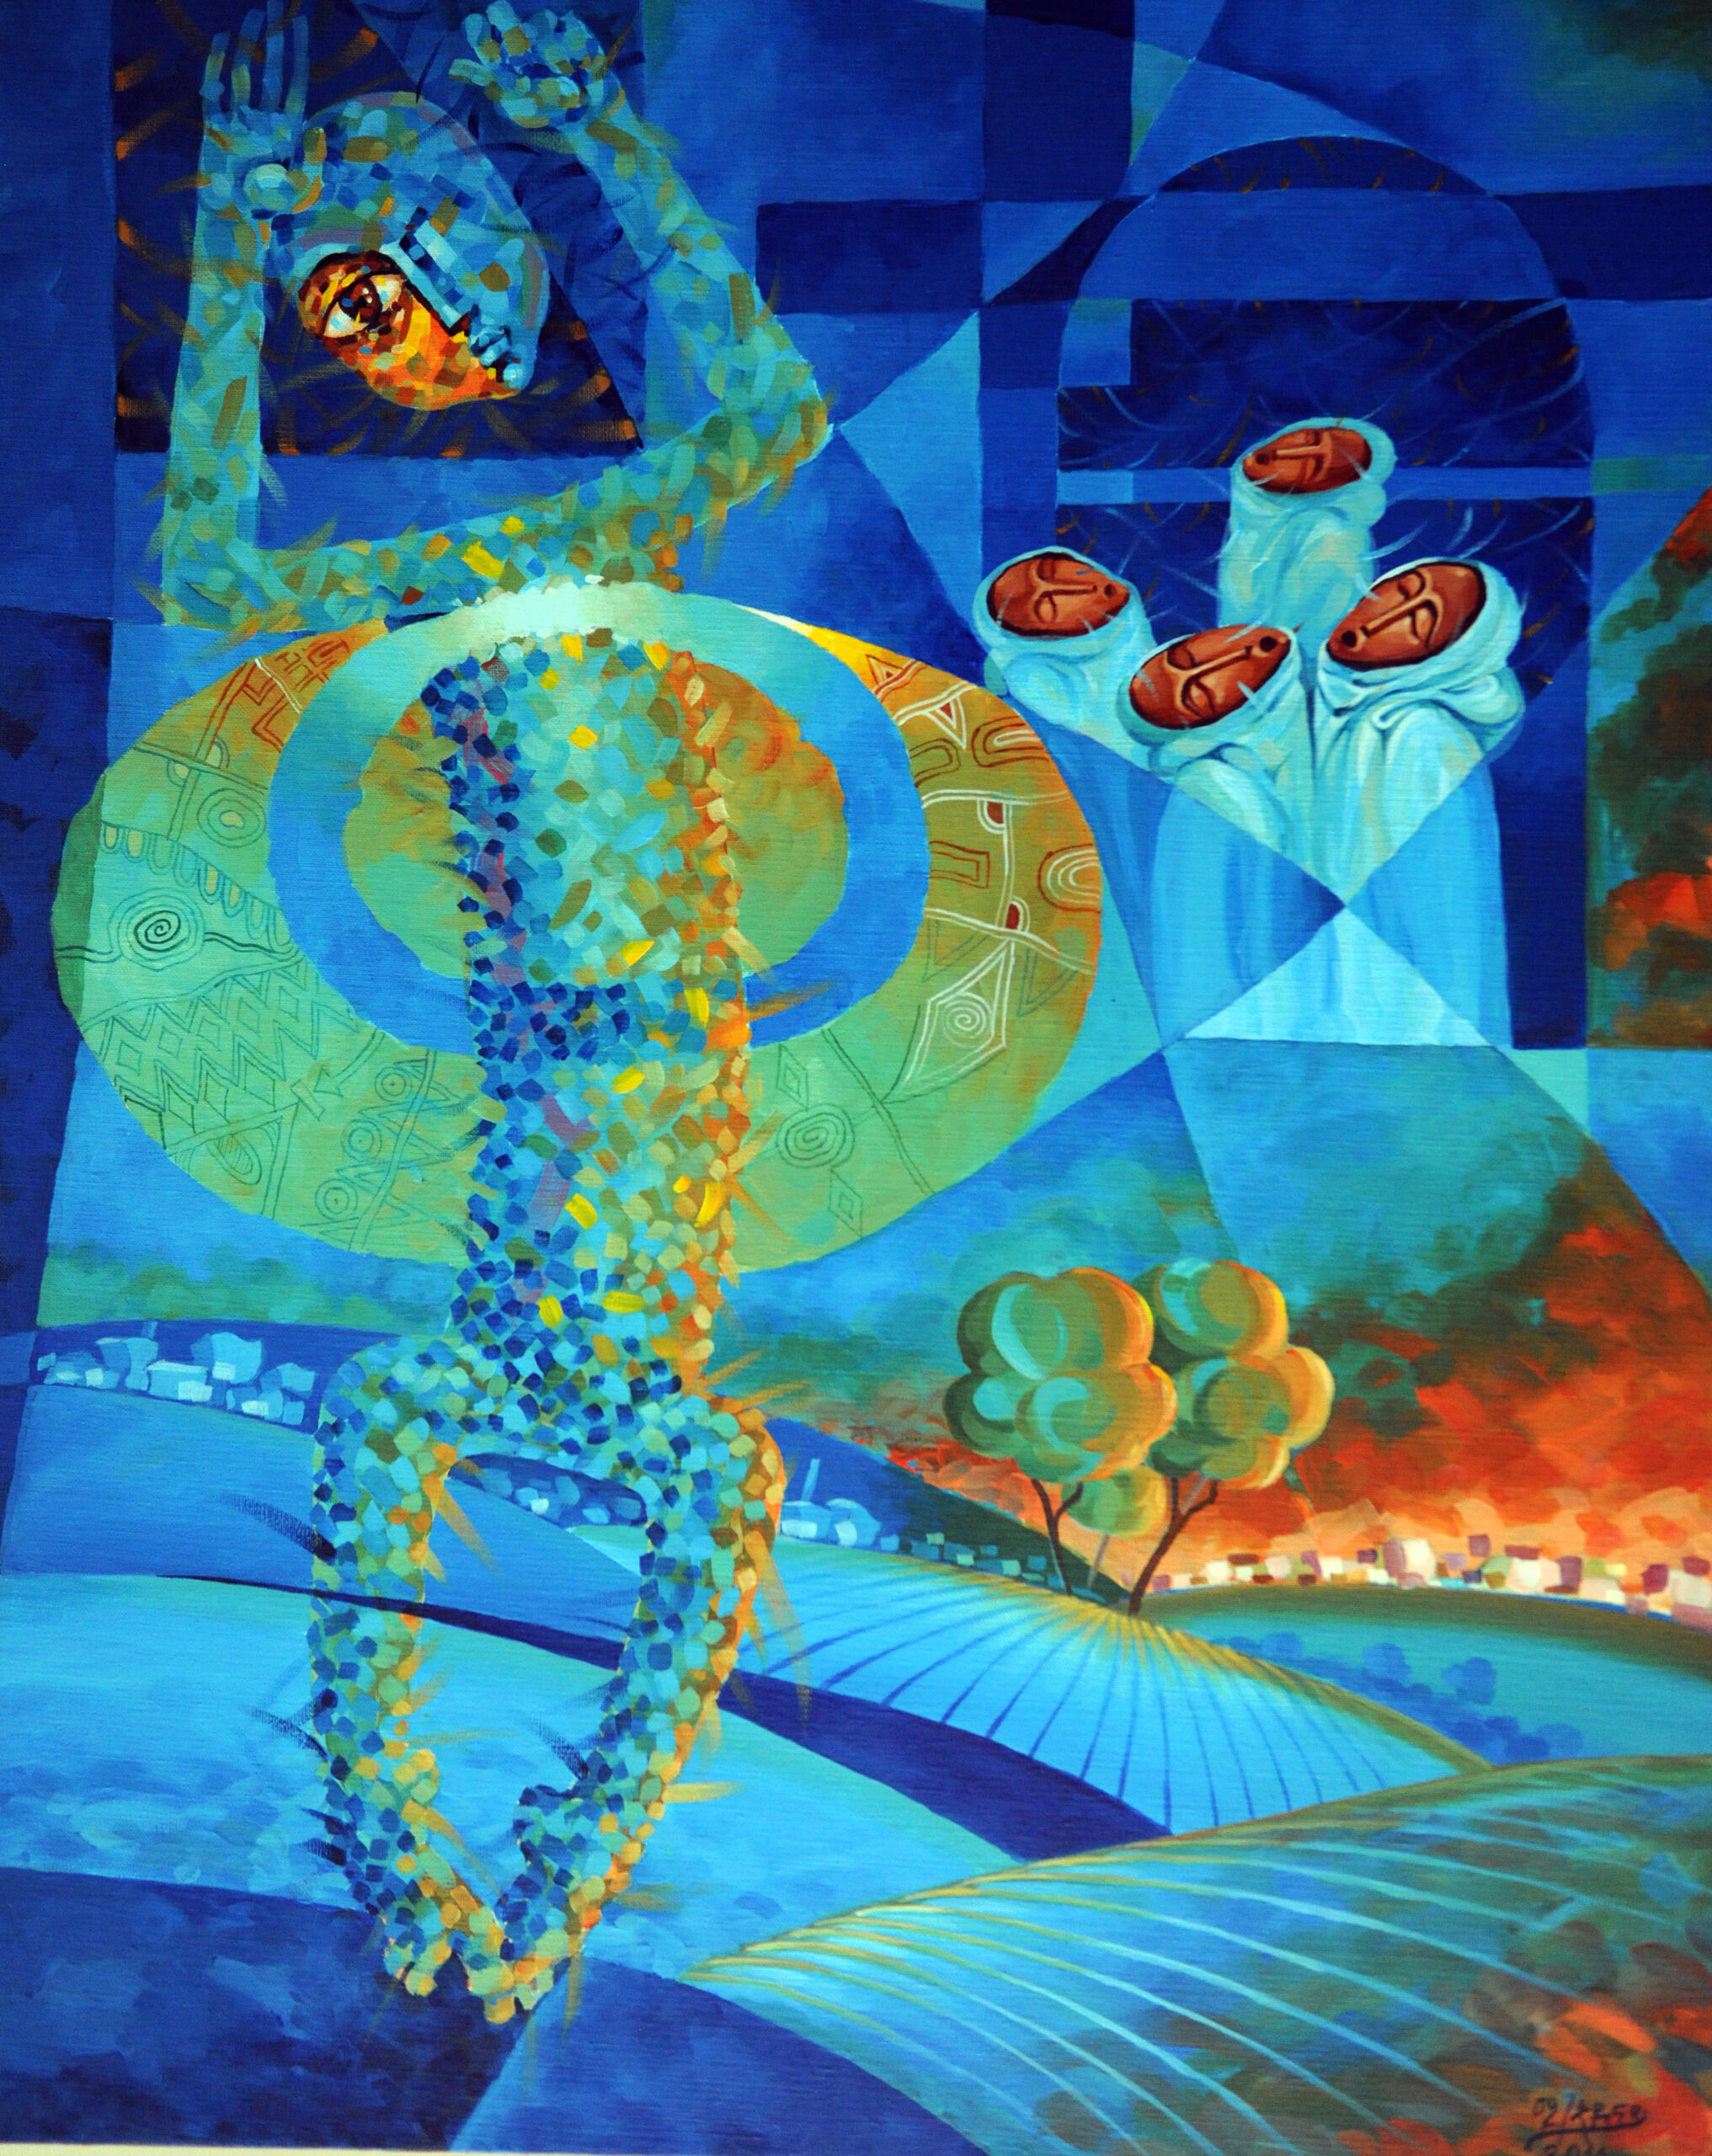 A Newborn Child (2011), acrylic on canvas (115 X 95 CM) 300 dpi, 3723 x 4288 pixels; a blue scene, a woman-like face peering in the corner